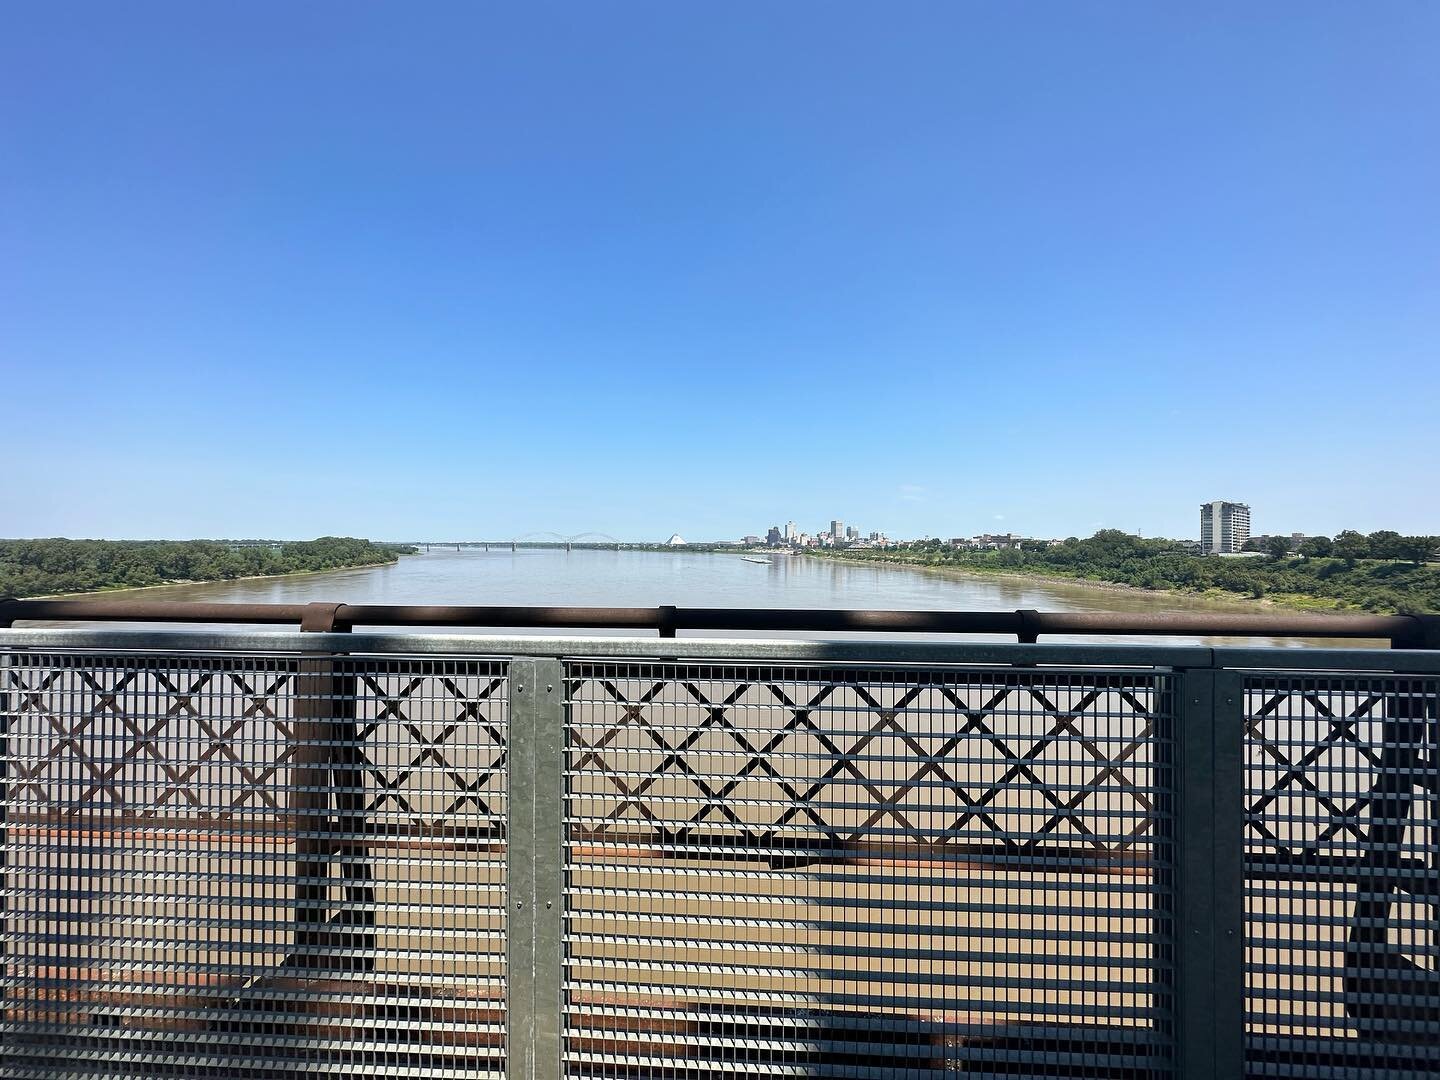 Soak in the views from the longest pedestrian bridge across the Mississippi River.

📸 allthingstron_